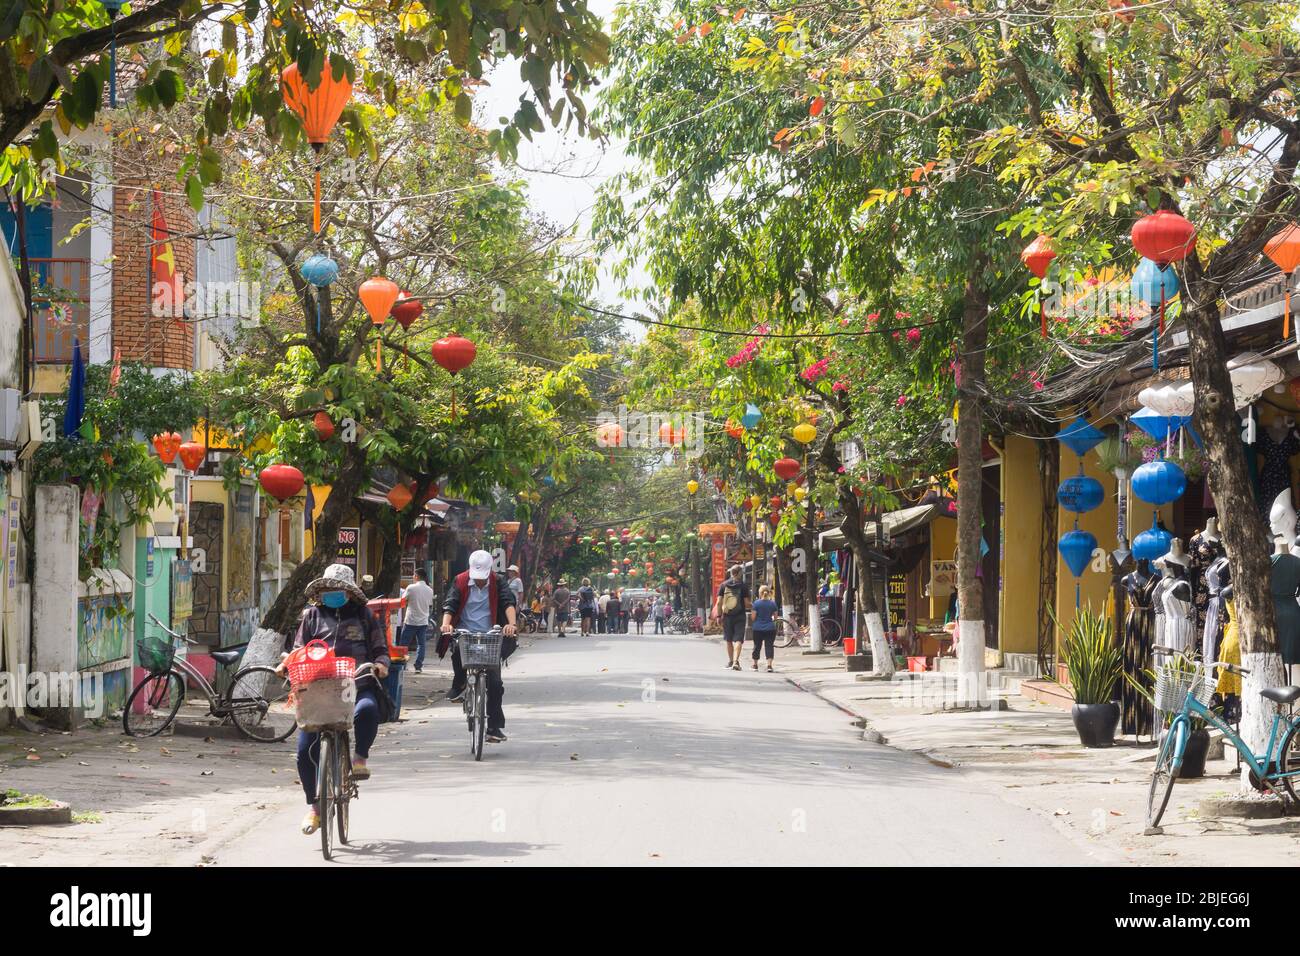 Vietnam Hoi An - Lantern decorated street in Hoi An ancient town, Vietnam, Southeast Asia. Stock Photo